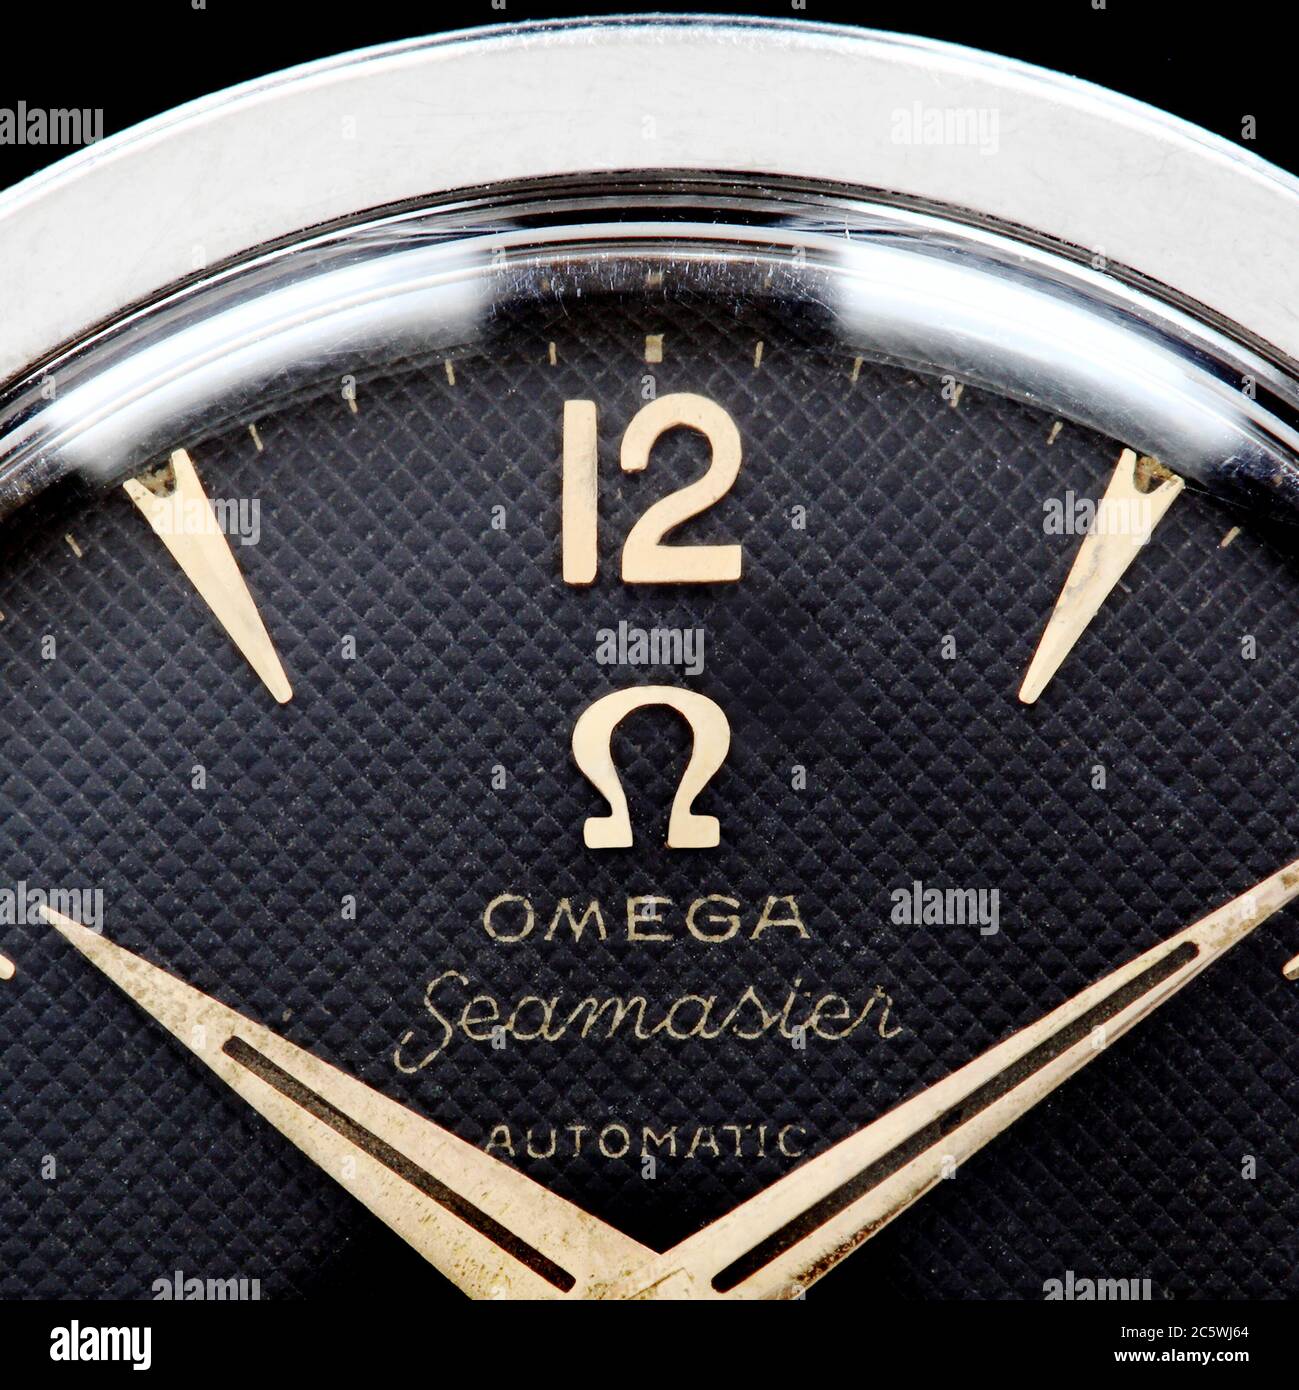 Clásico 50 Omega Seamaster logotipo Omega, símbolo o Marca comercial en un panal de abeja o reloj de esfera de waffle. Omega reloj de pulsera de la compañía de relojería. Foto de stock